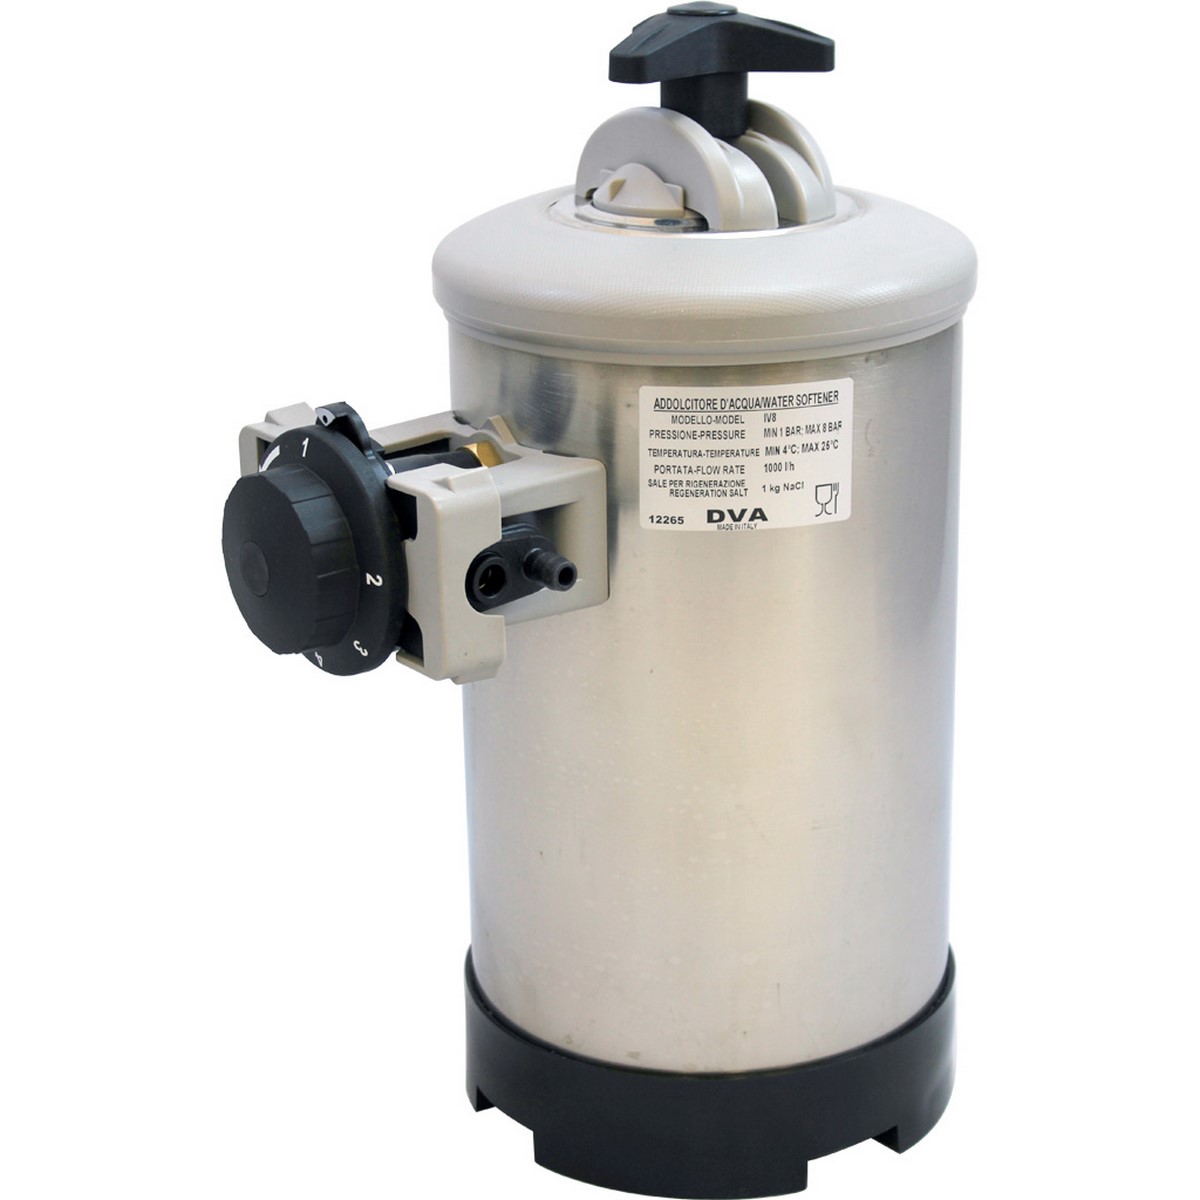 Manual water softener DVA - IV Series- IV20